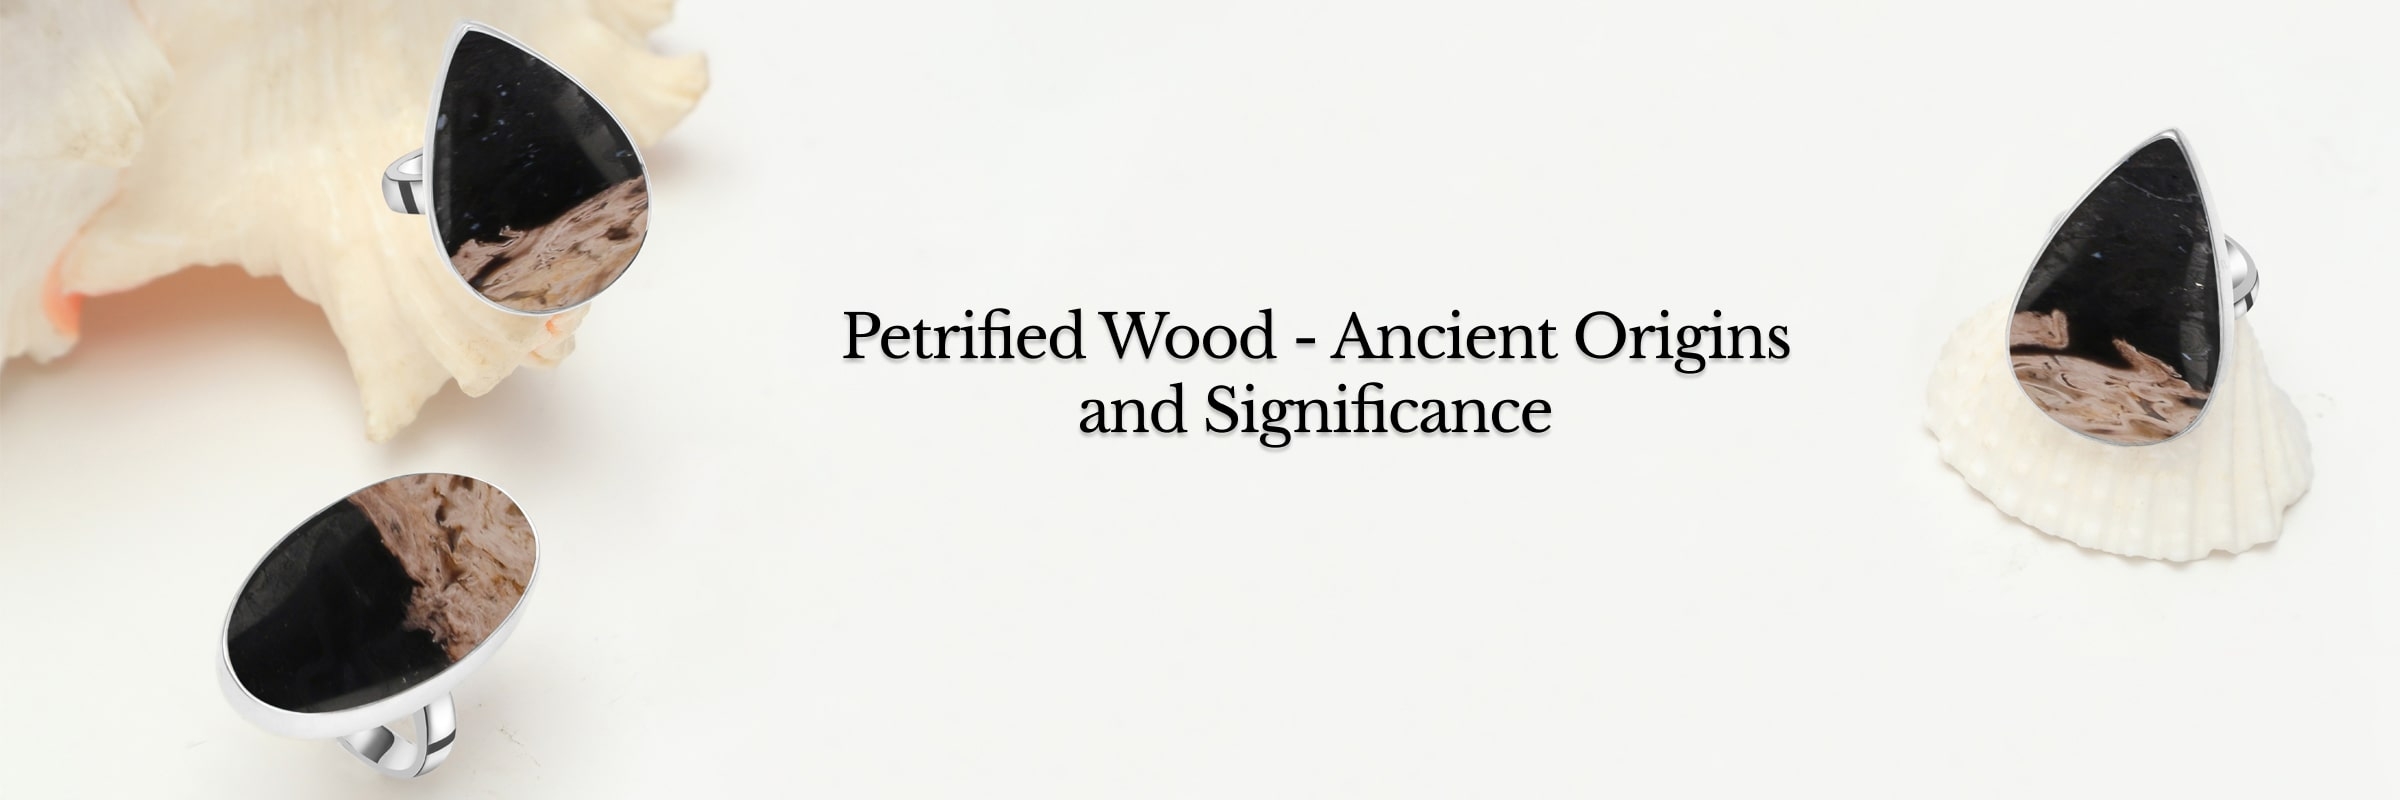 History of Petrified Wood Stone